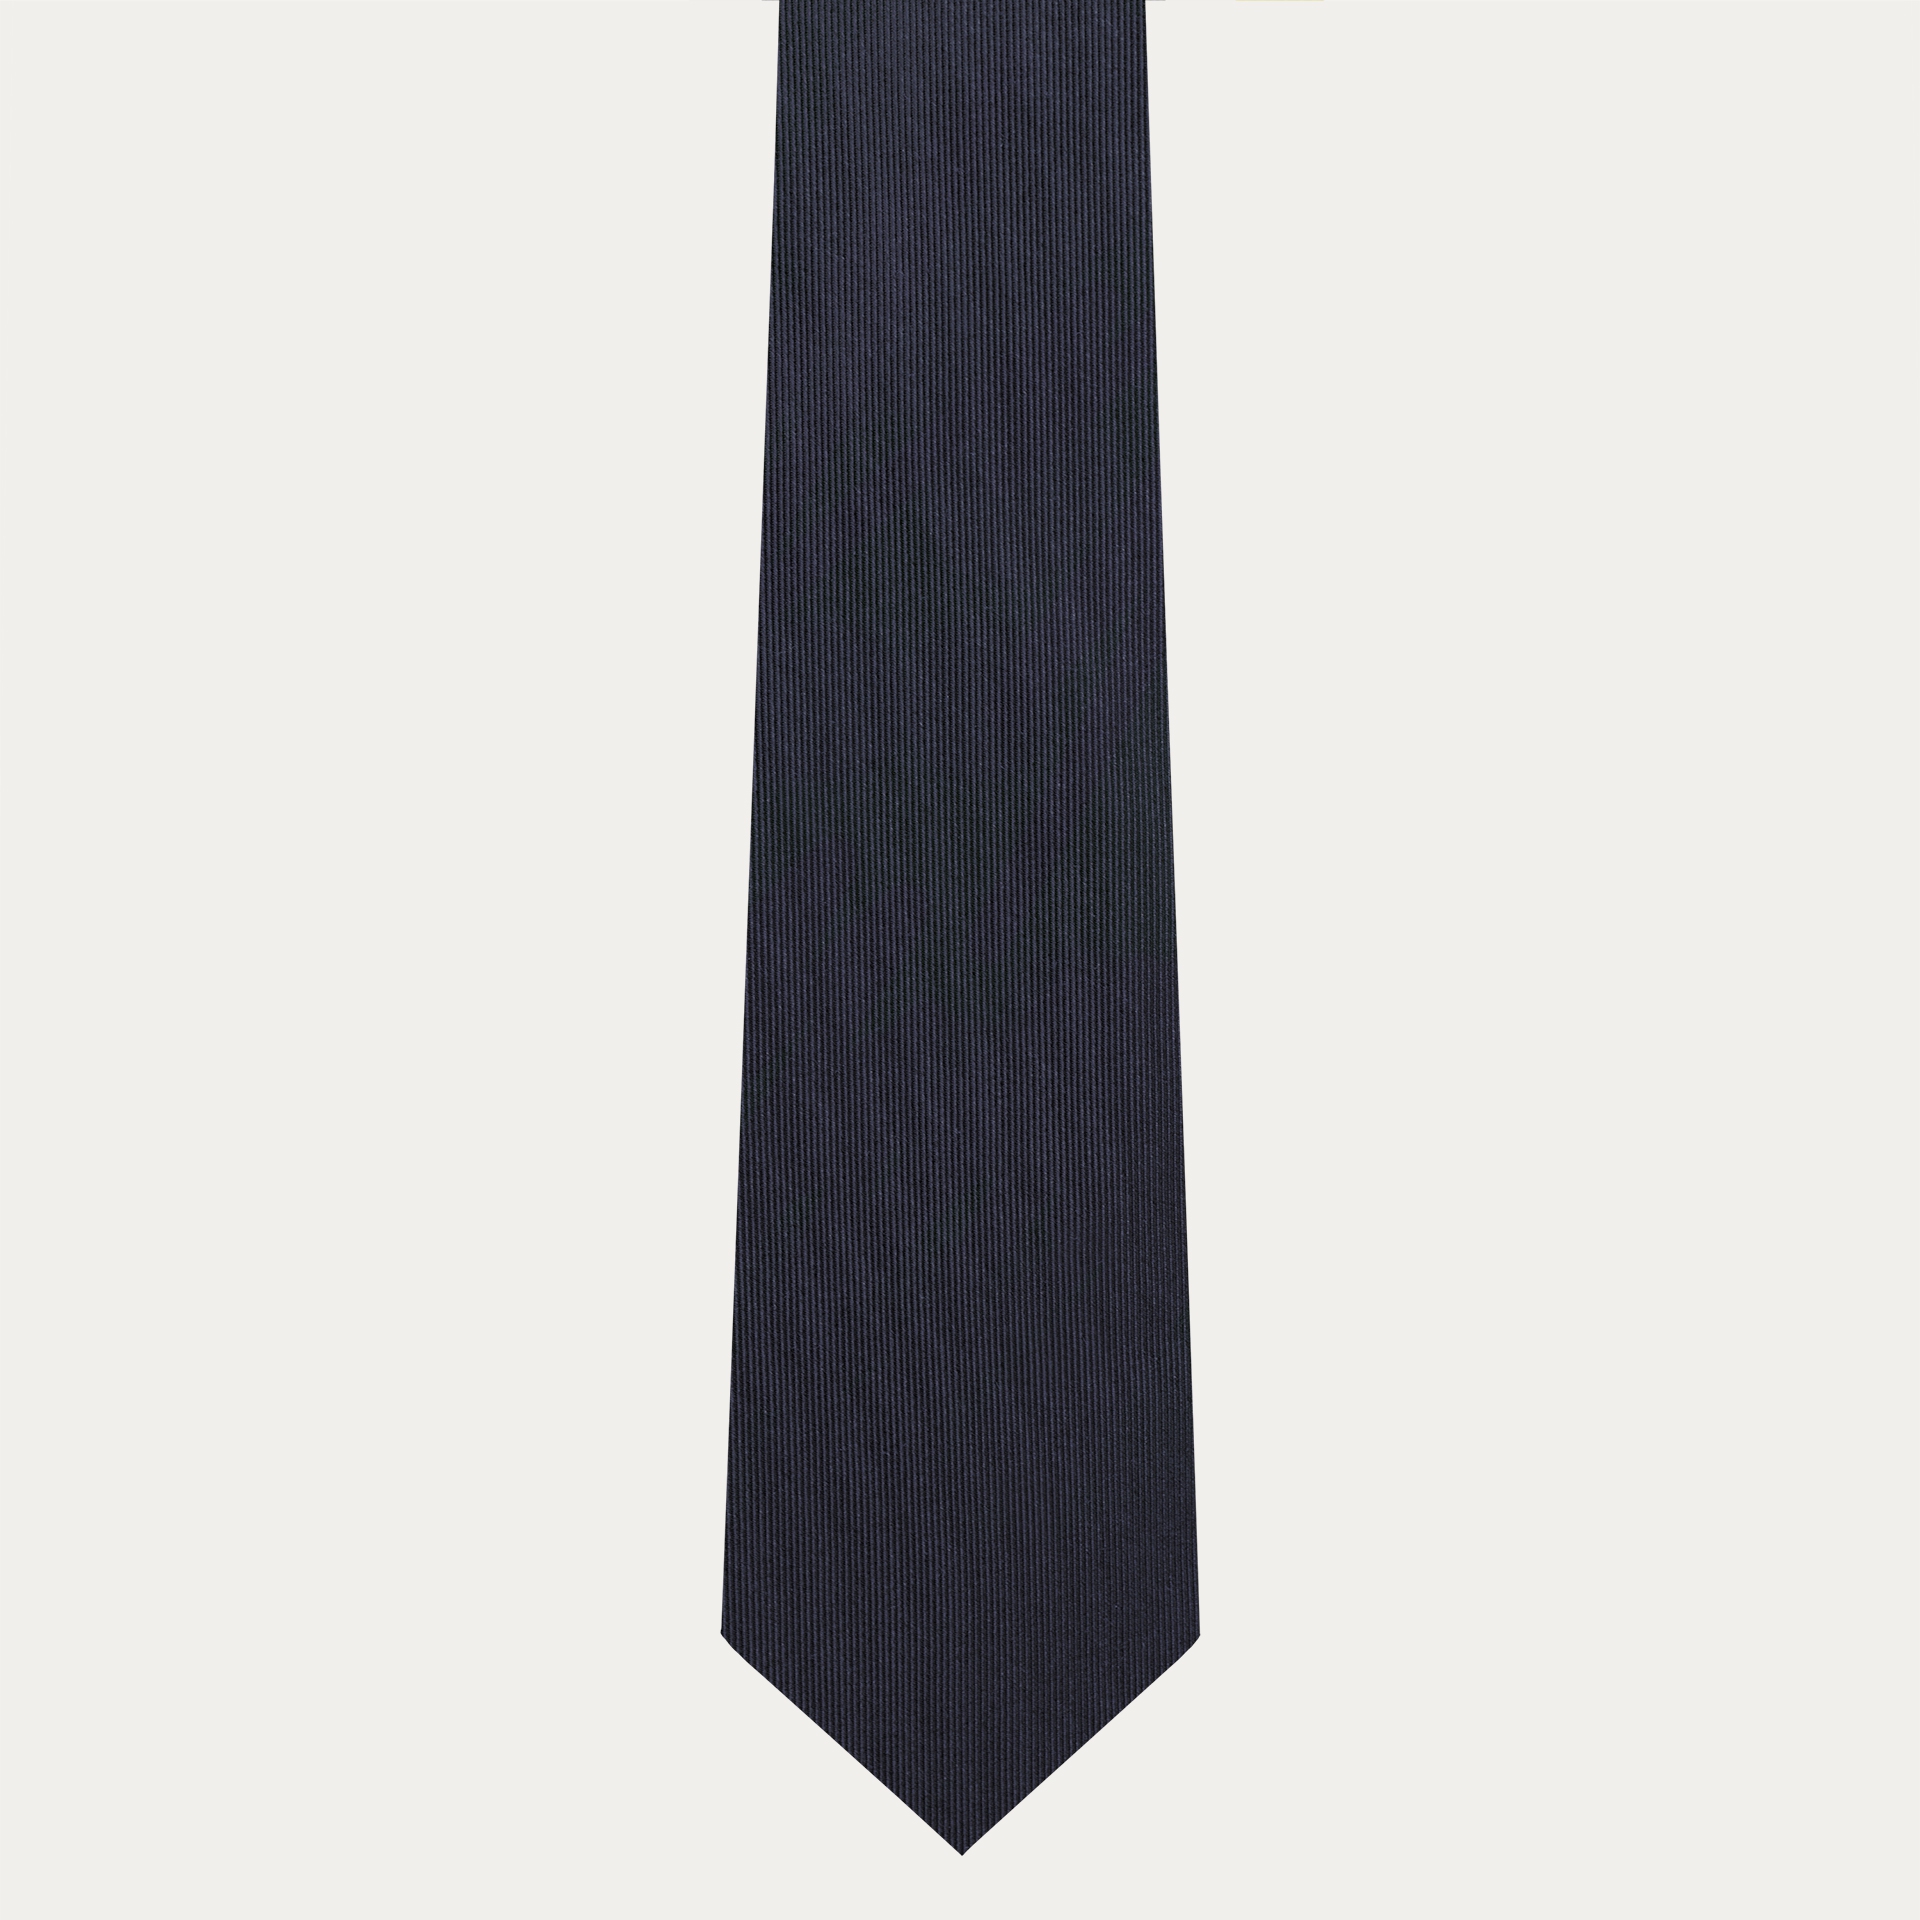 Cravatta blu navy 3 pieghe in seta